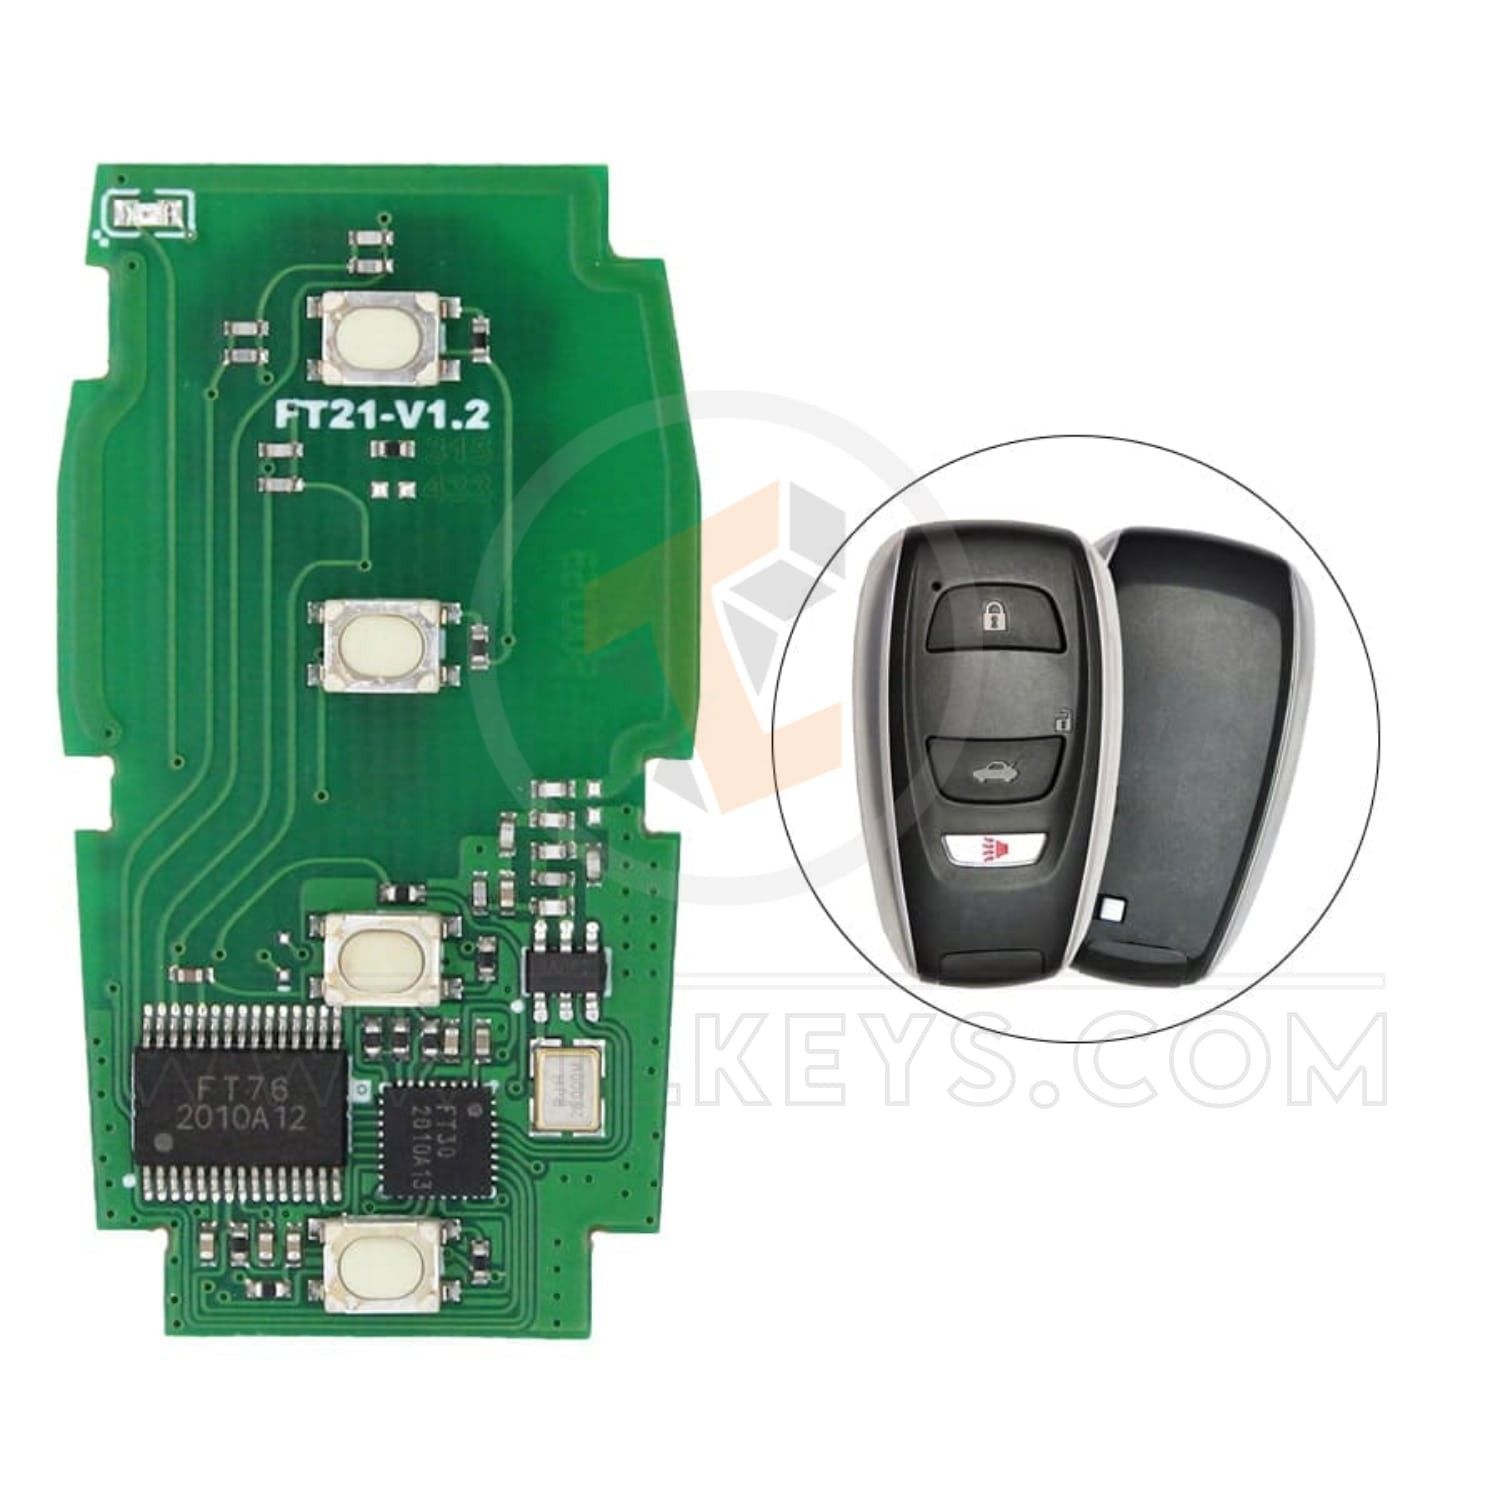 Lonsdor Subaru 2014-2020 Smart Board Key Remote 4 Buttons 314.35 MHz Frequency 314MHz